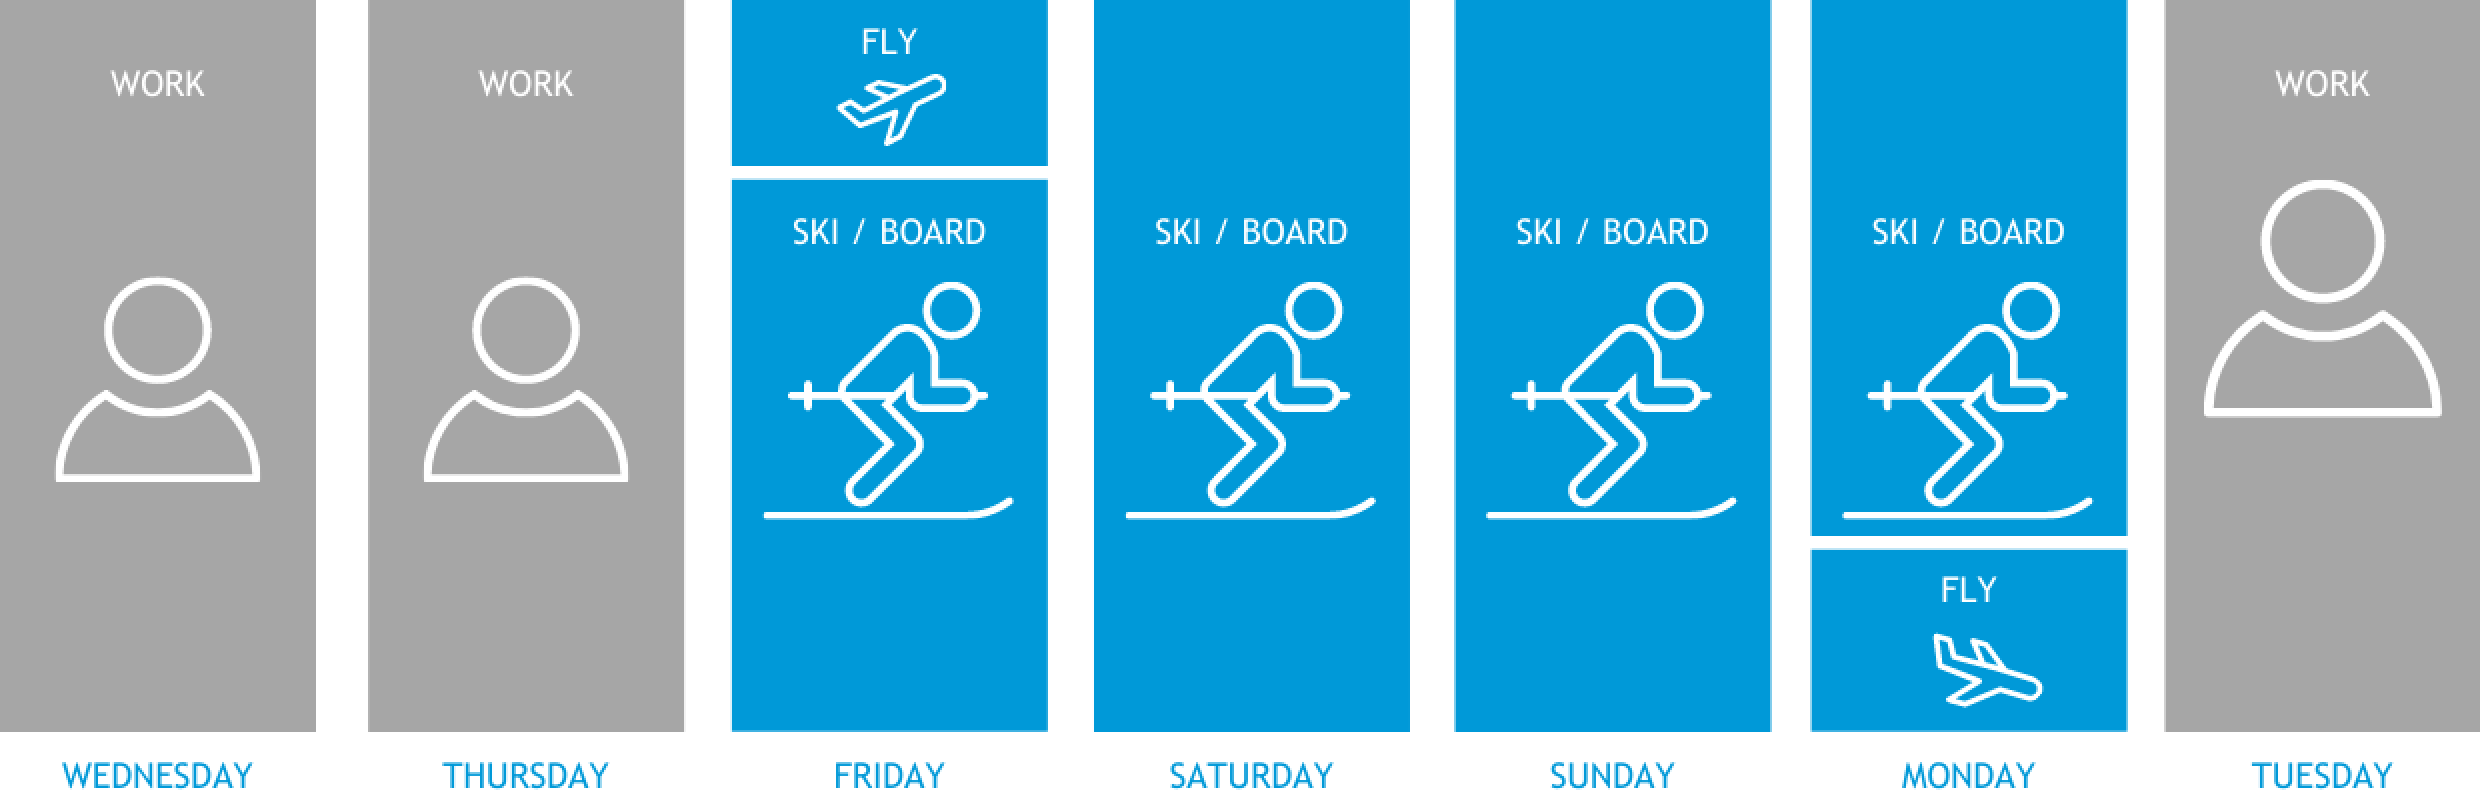 4 Day Ski Holidays - How It Works